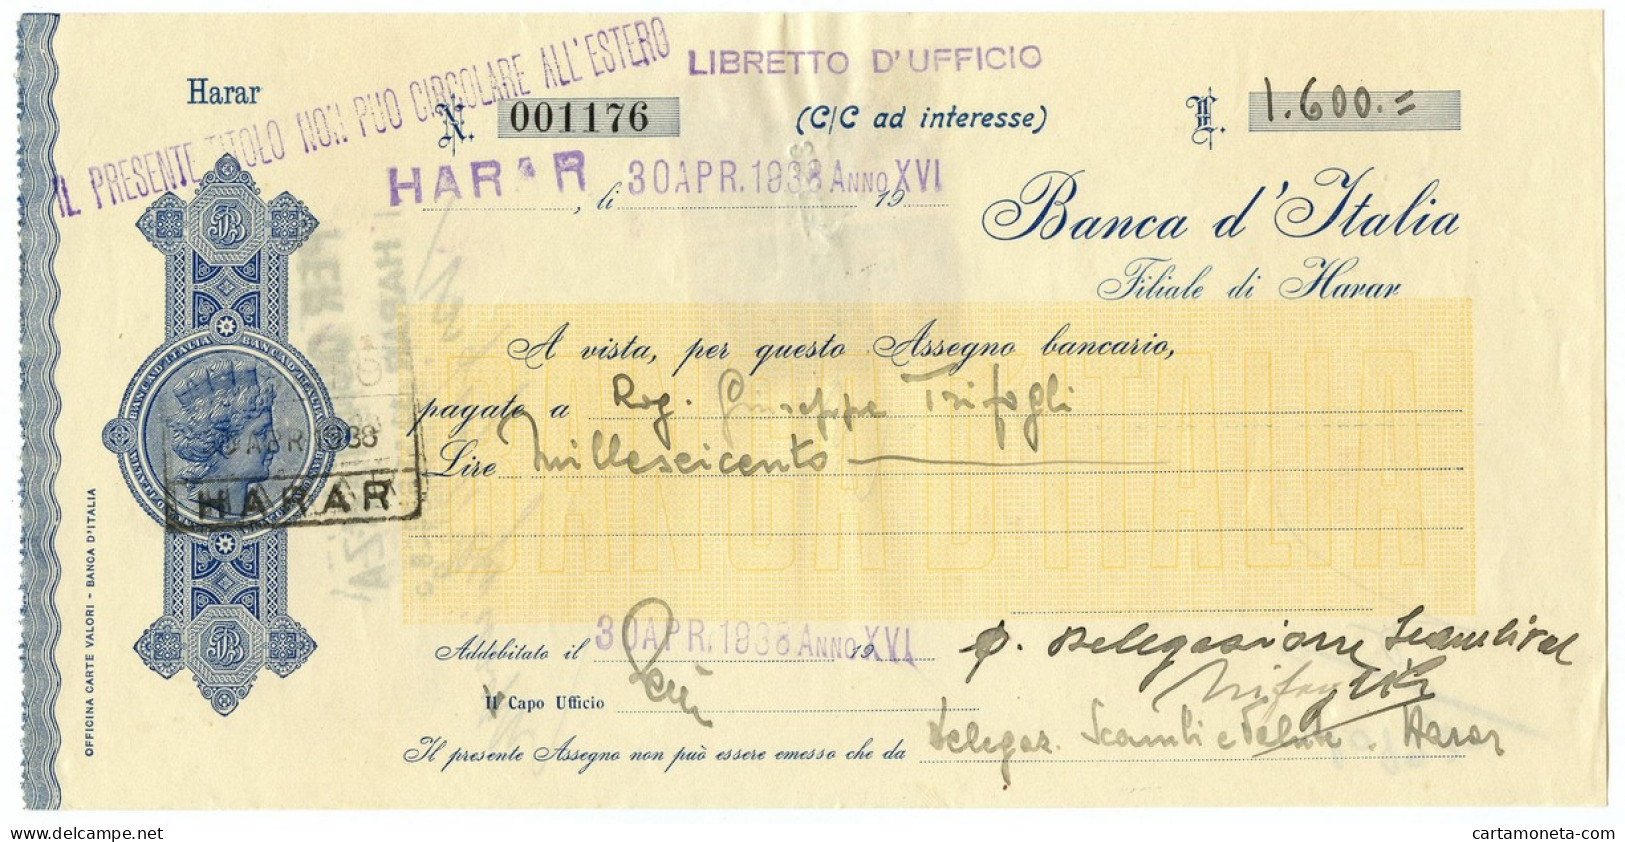 1600 LIRE ASSEGNO C/C AD INTERESSE BANCA D'ITALIA FILIALE HARAR 30/04/1938 SUP - Italian East Africa